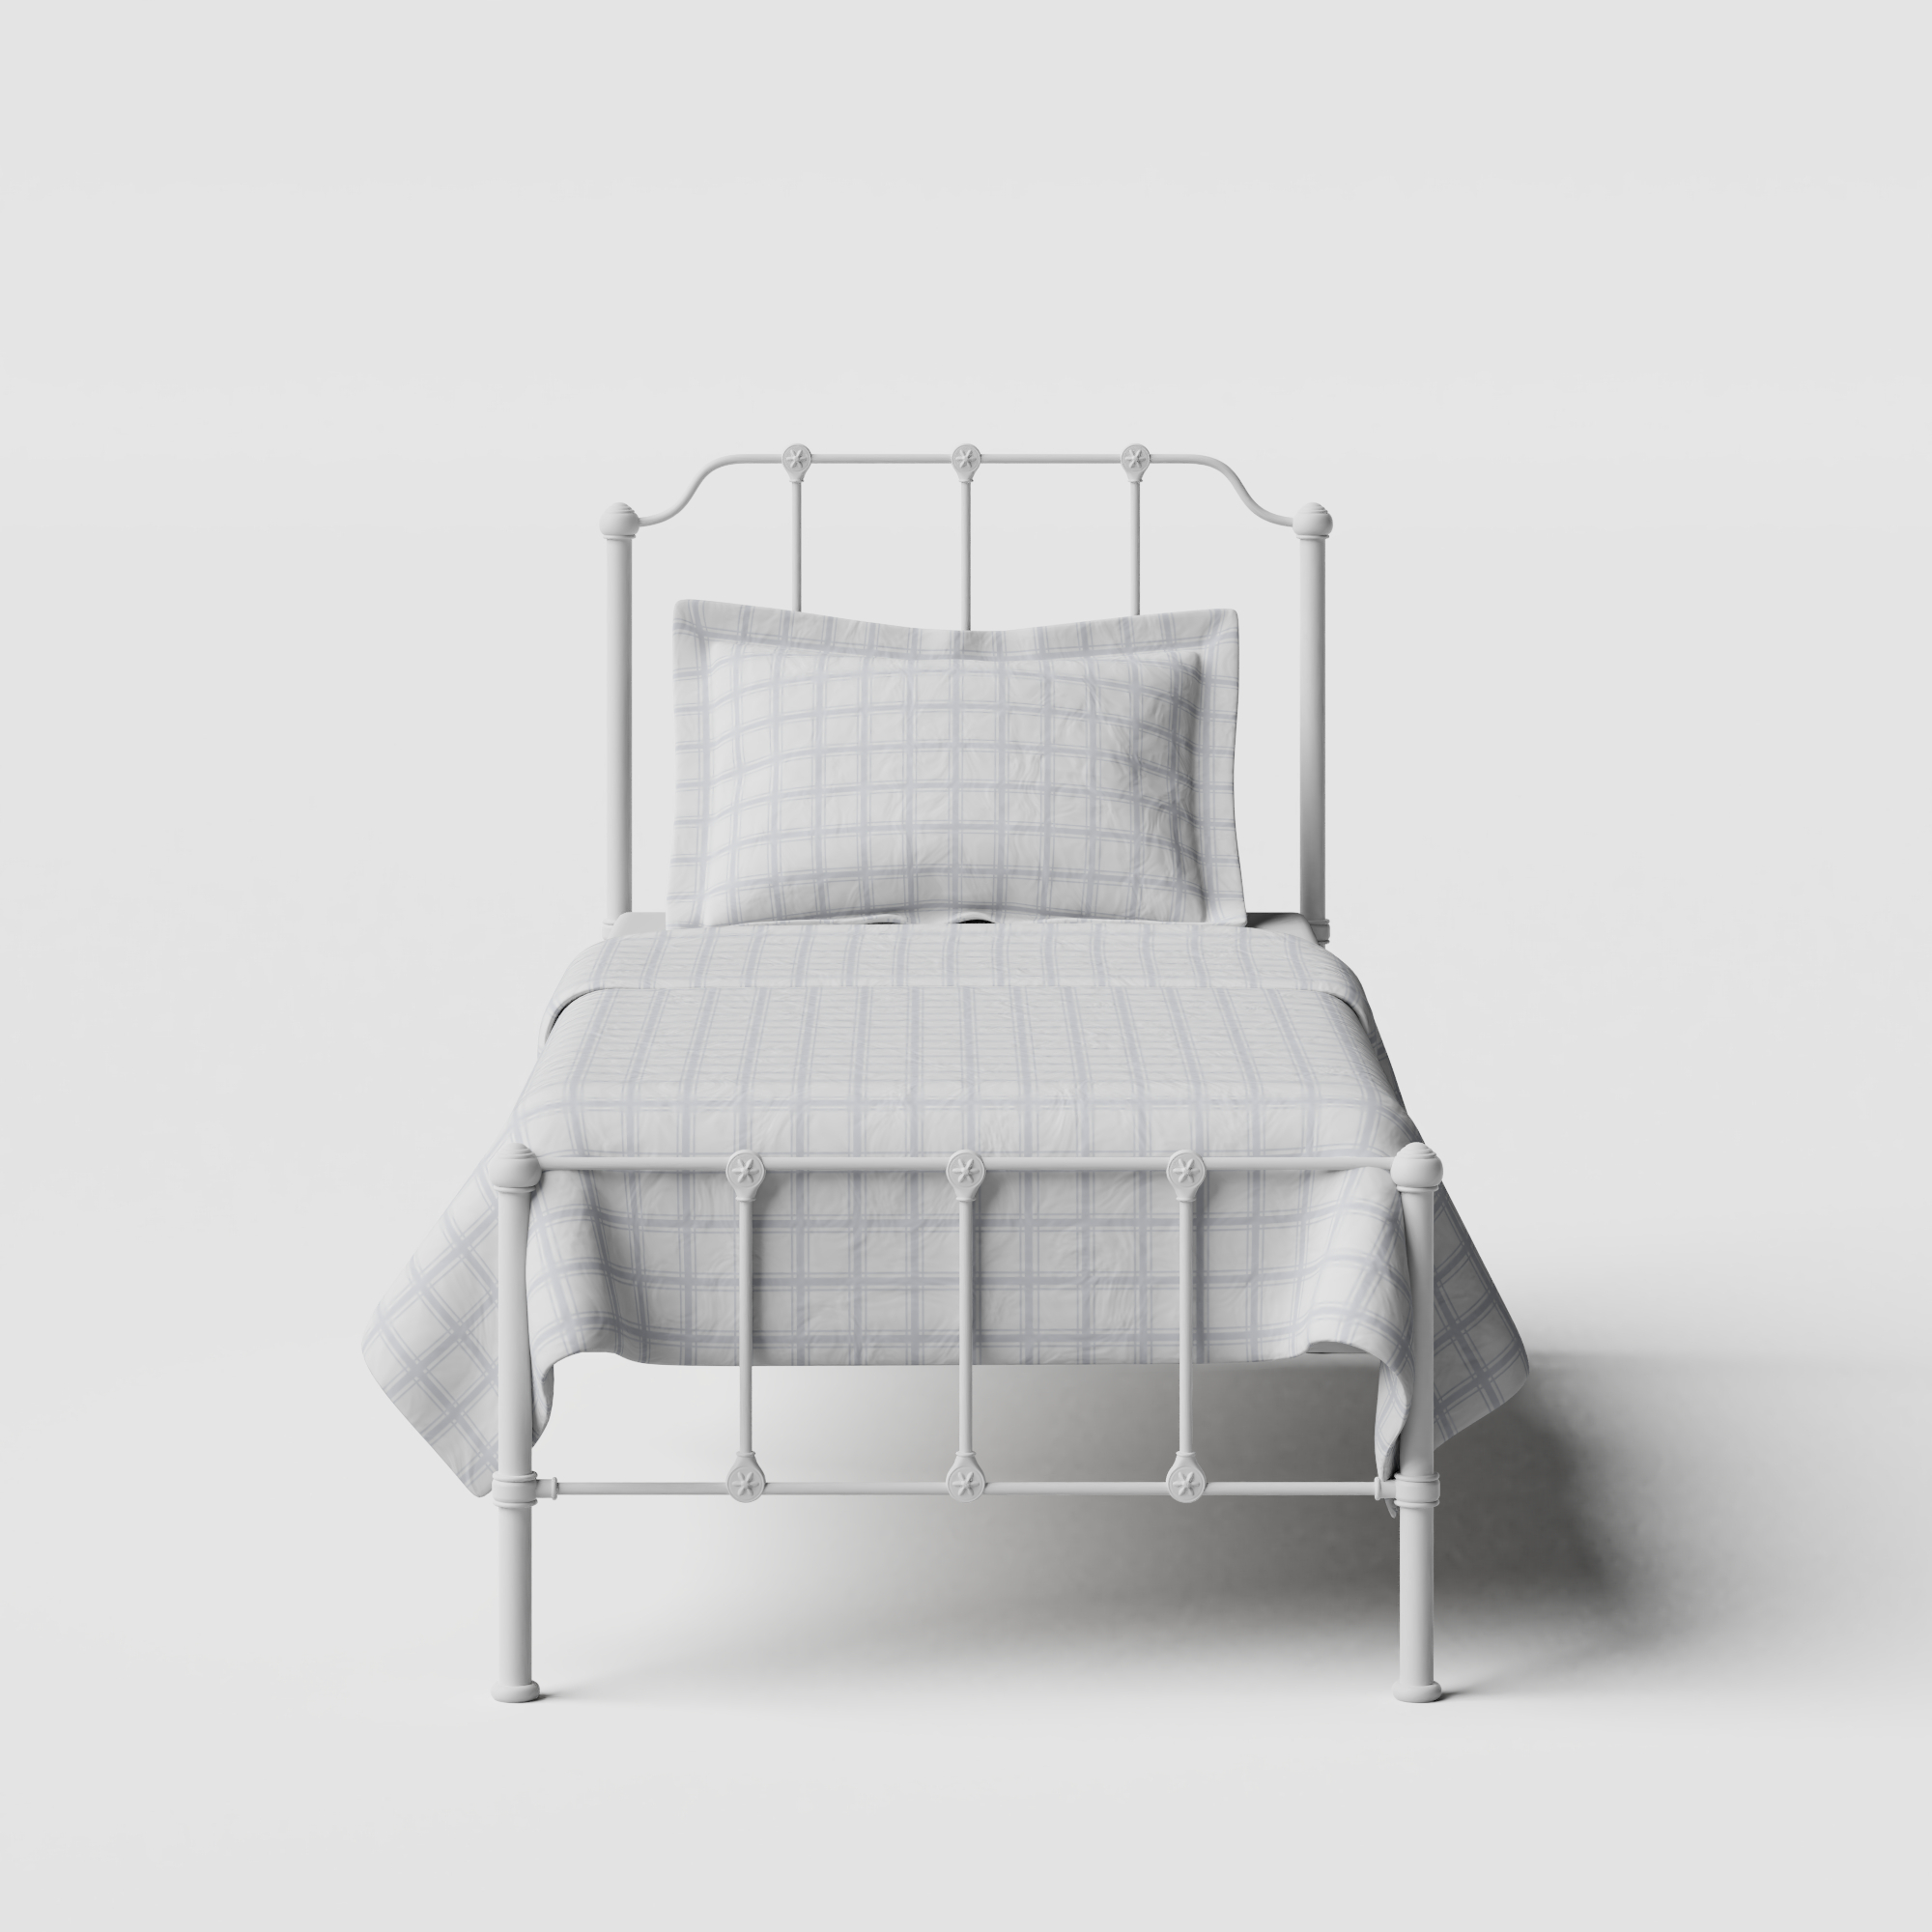 Julia iron/metal single bed in white